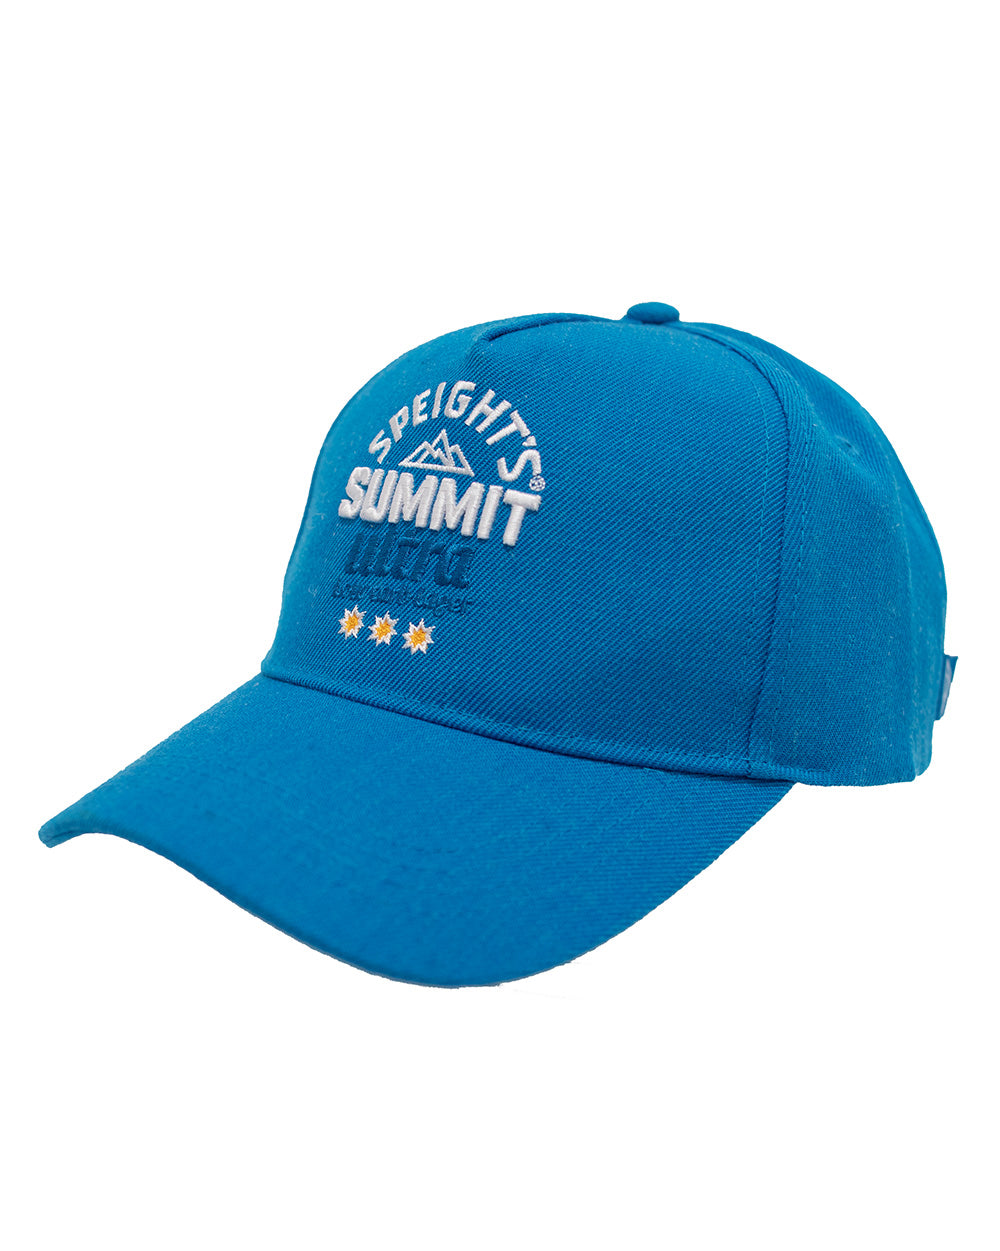 Speight's Summit ULTRA Cap -  Beer Gear Apparel & Merchandise - speights - lion red - vb - tokyo dry merch